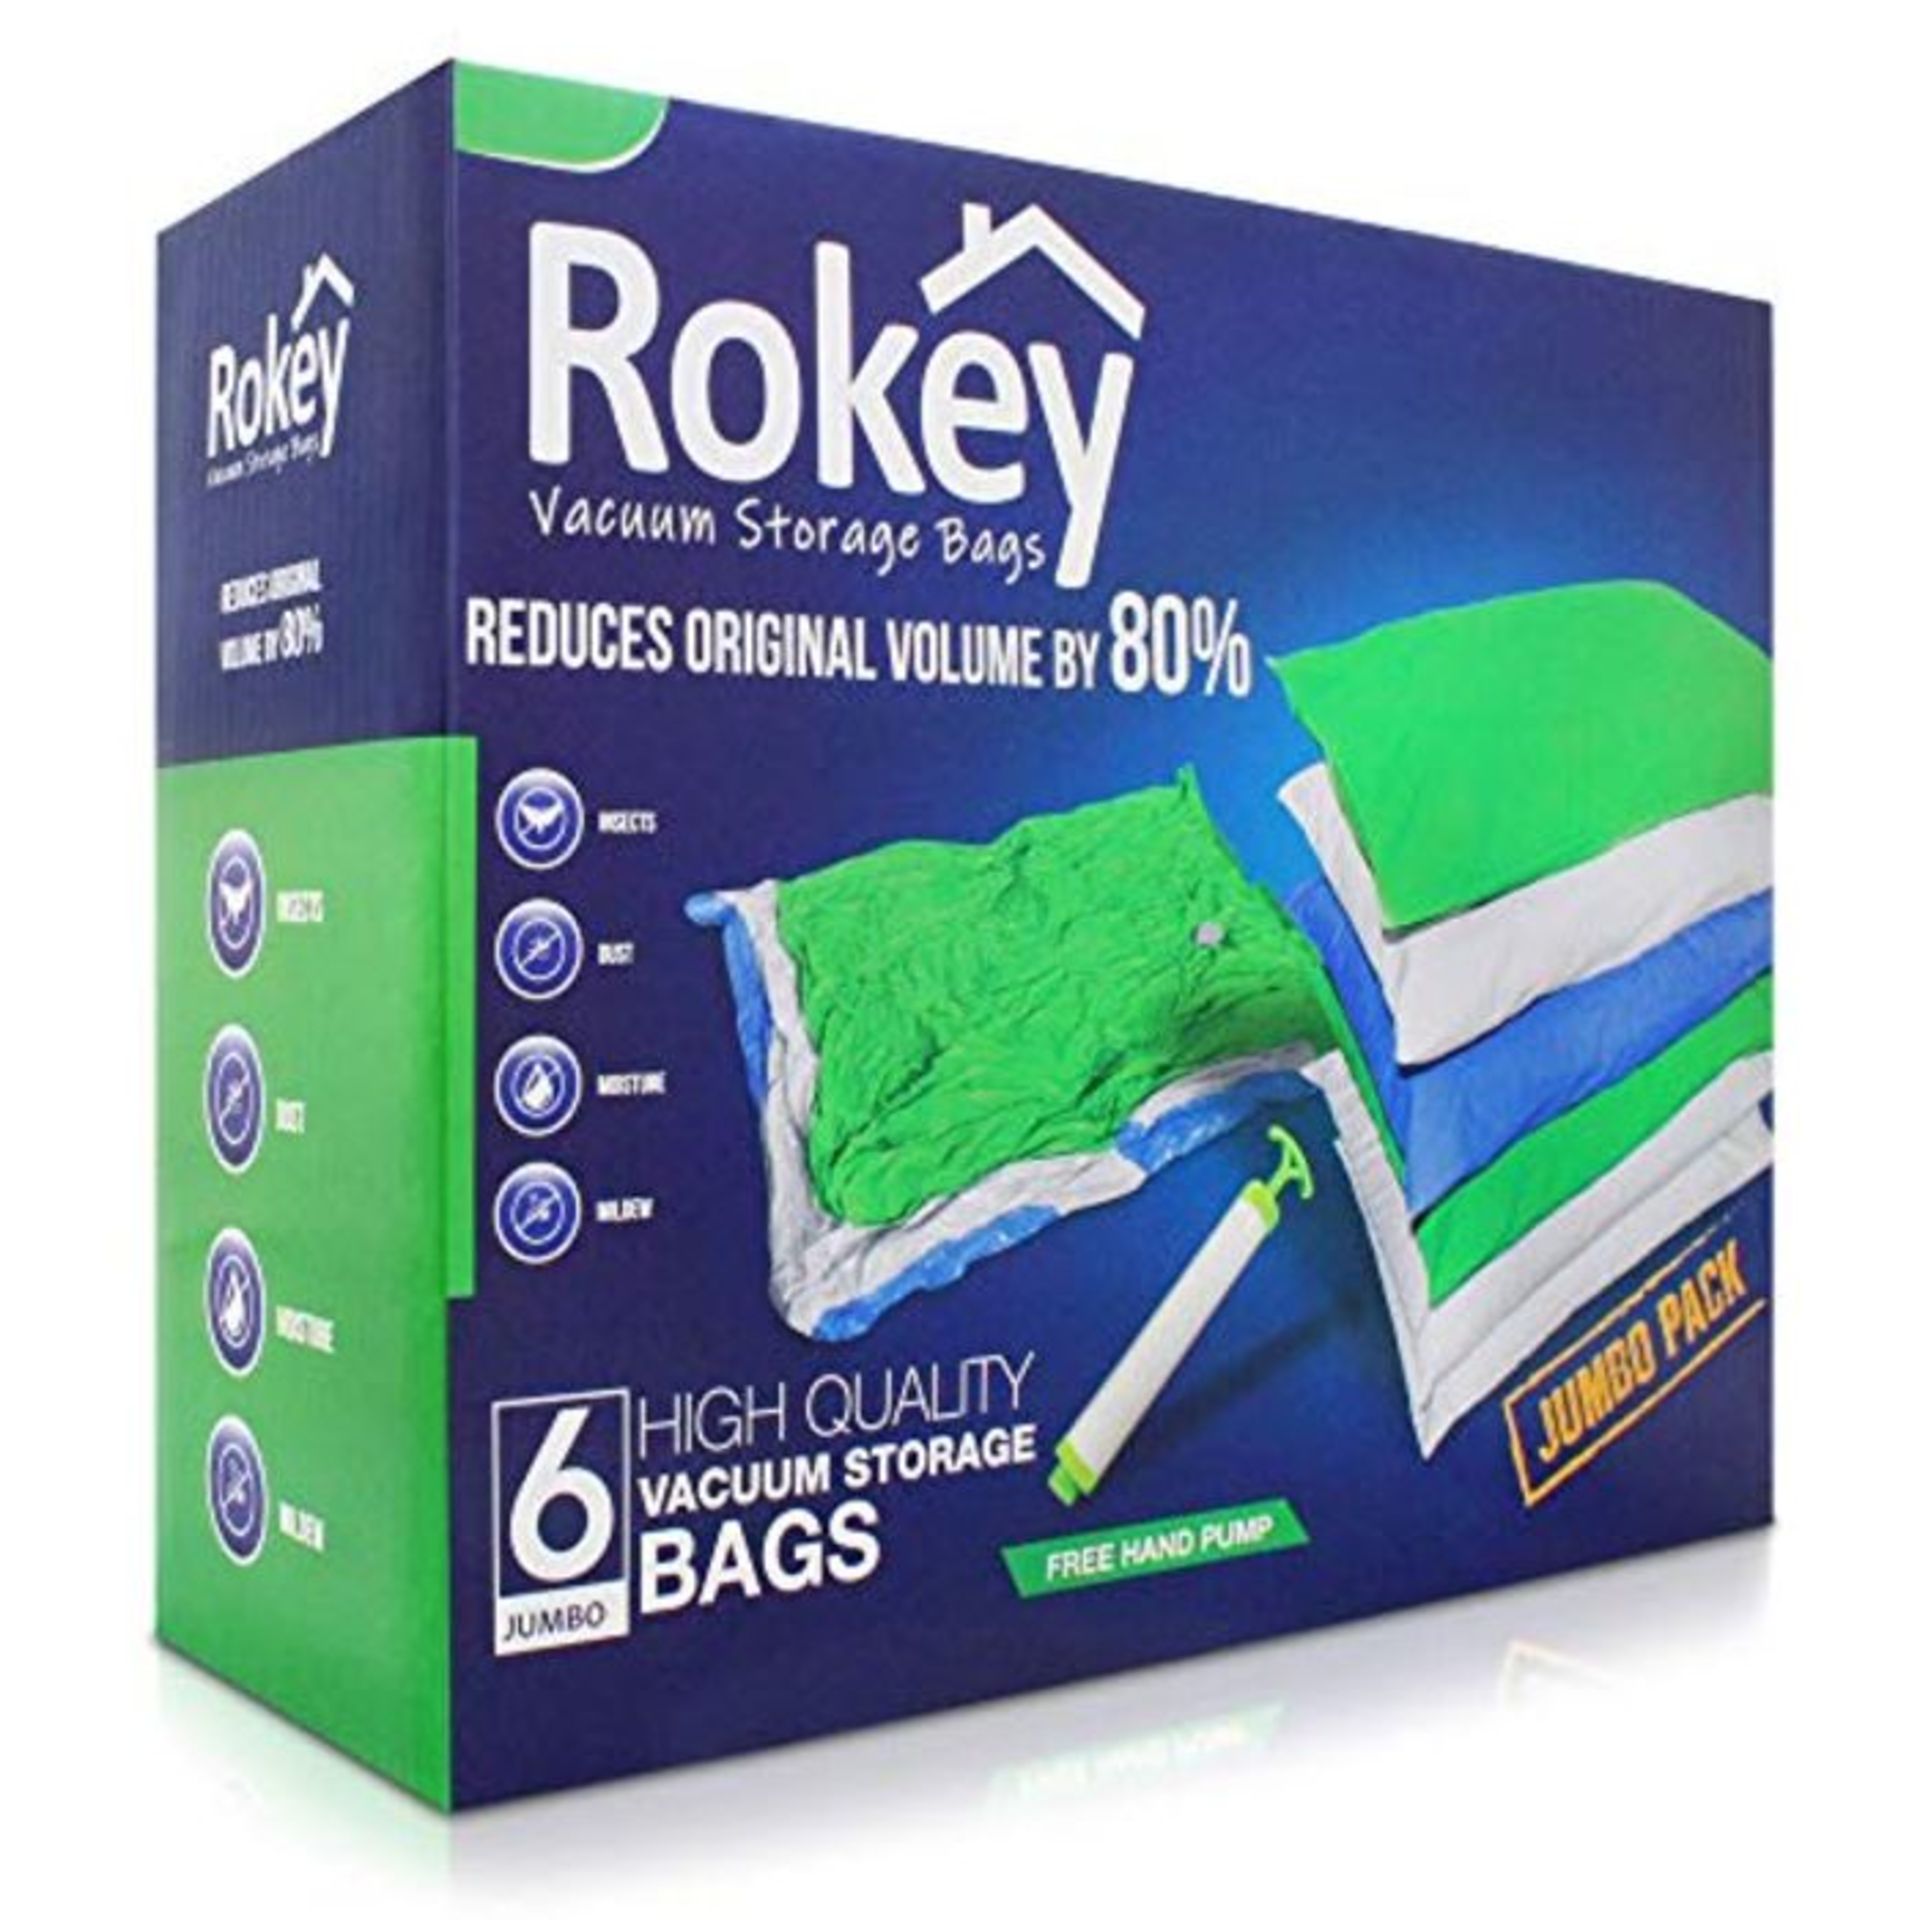 ROKEY Vacuum Storage Bags JUMBO LARGE (6 Pack 110 x 80 cm) Reusable Box. 80% More Stor